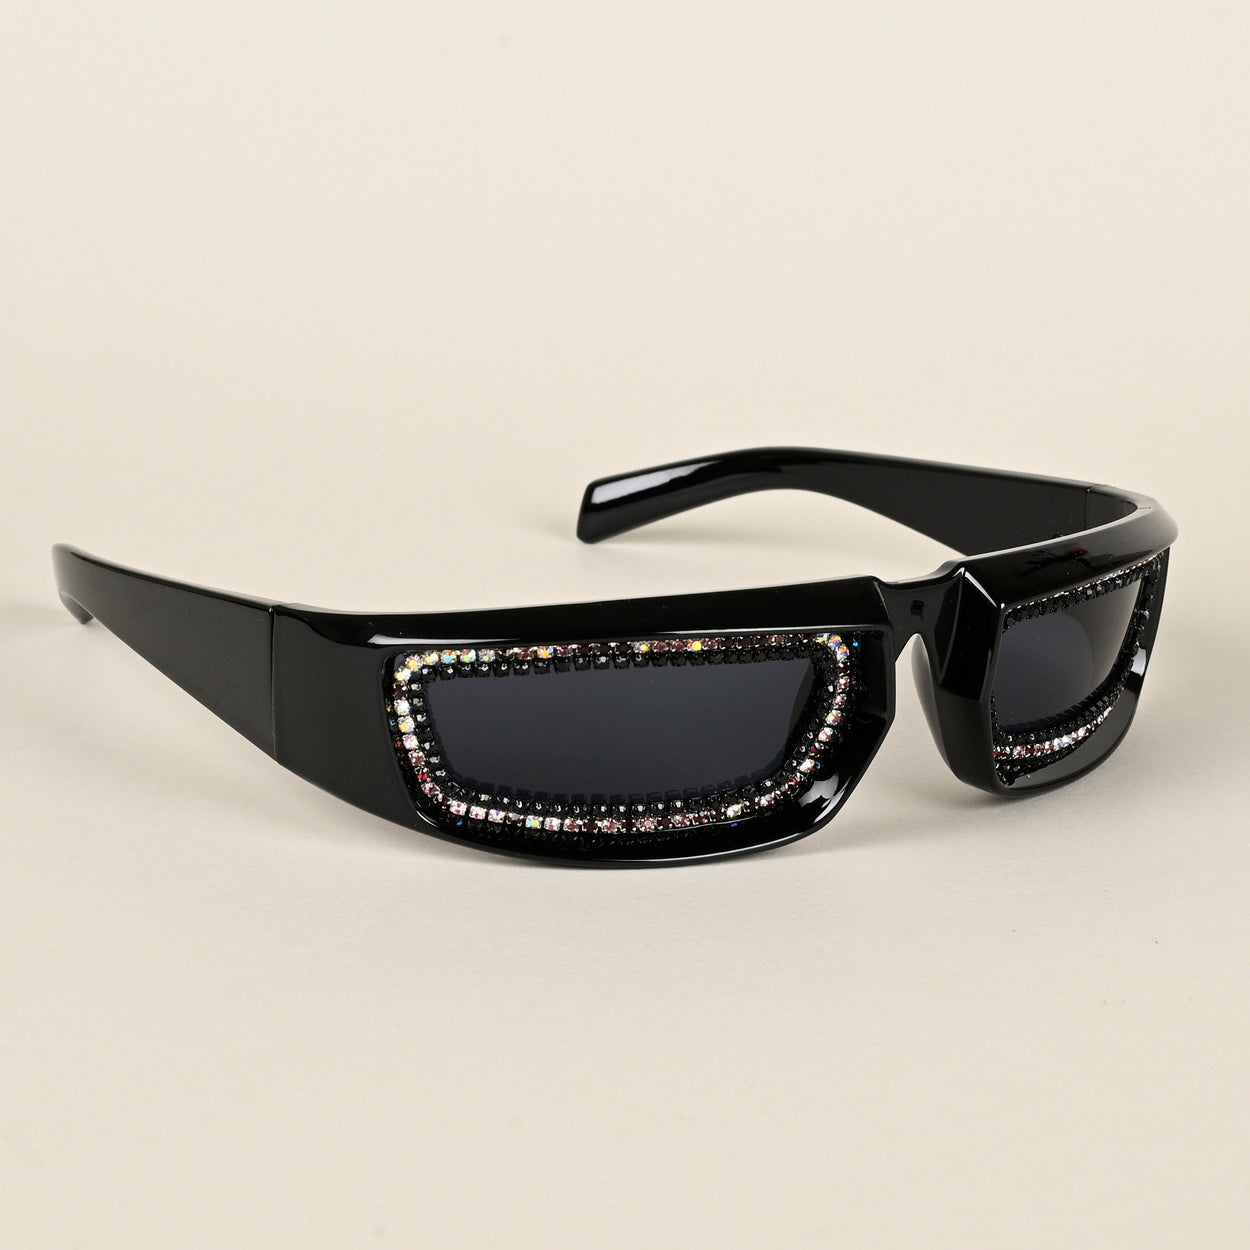 Voyage Black Wrap-Around Sunglasses for Men & Women (9182MG4352)